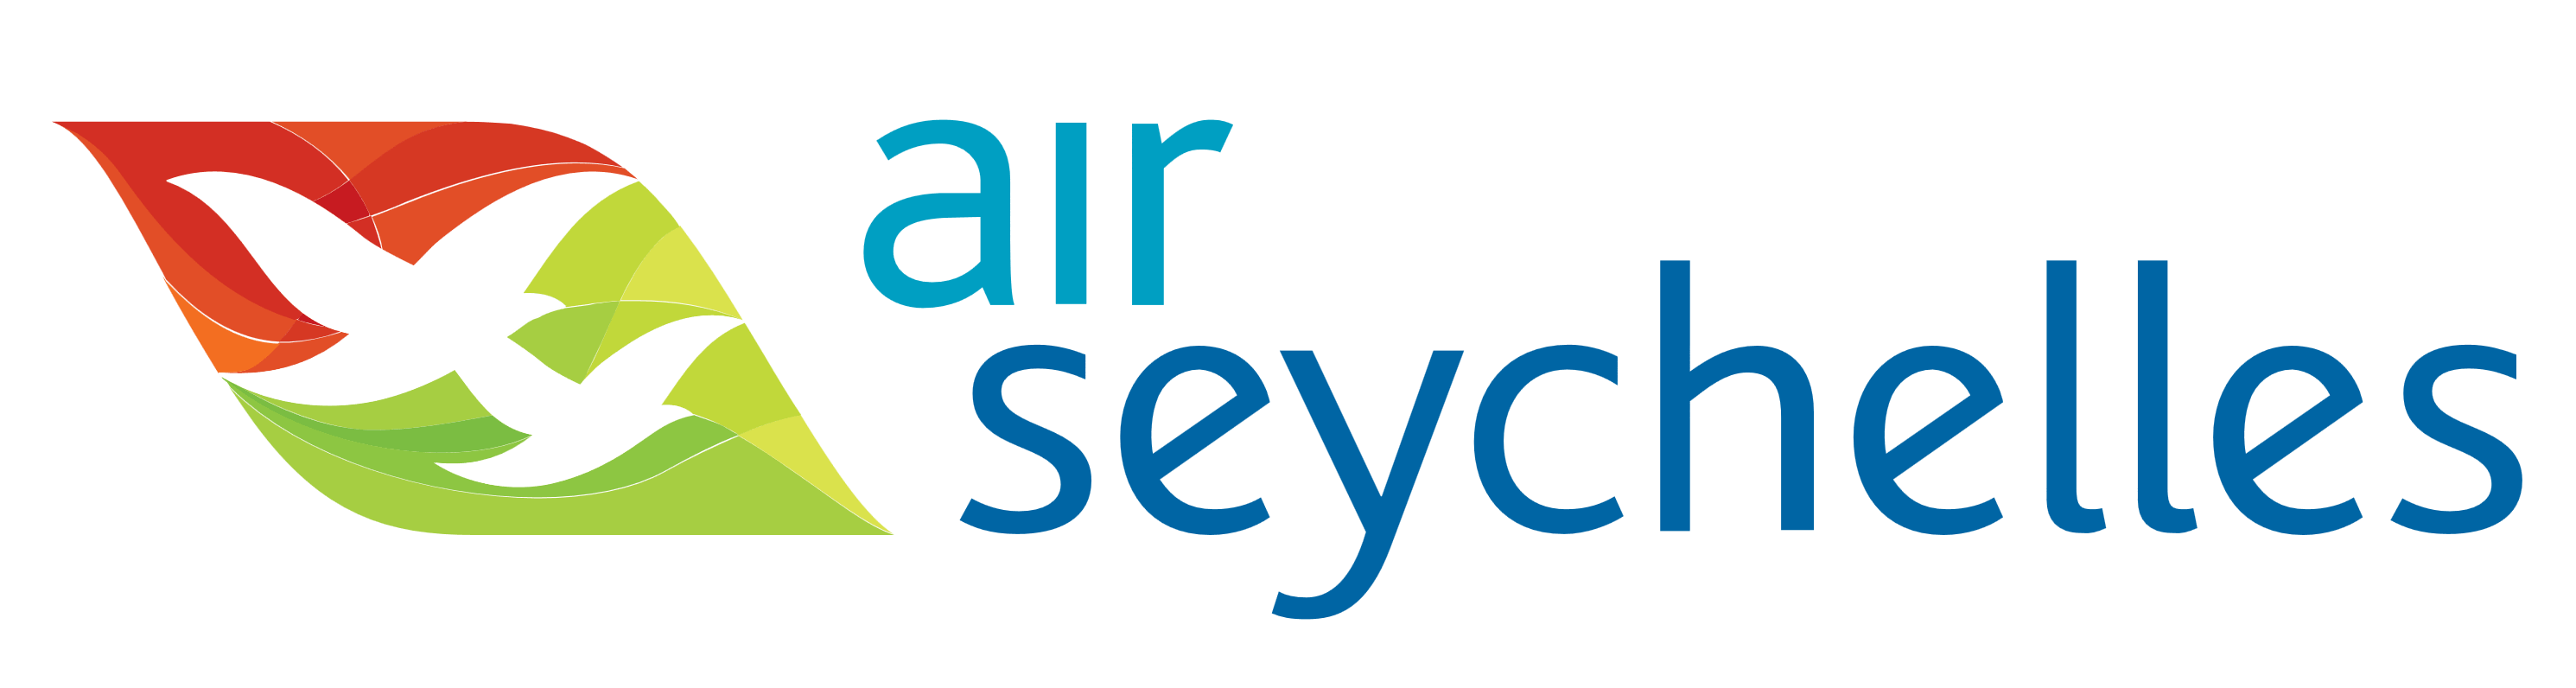 Air Seychelles logo, logotype